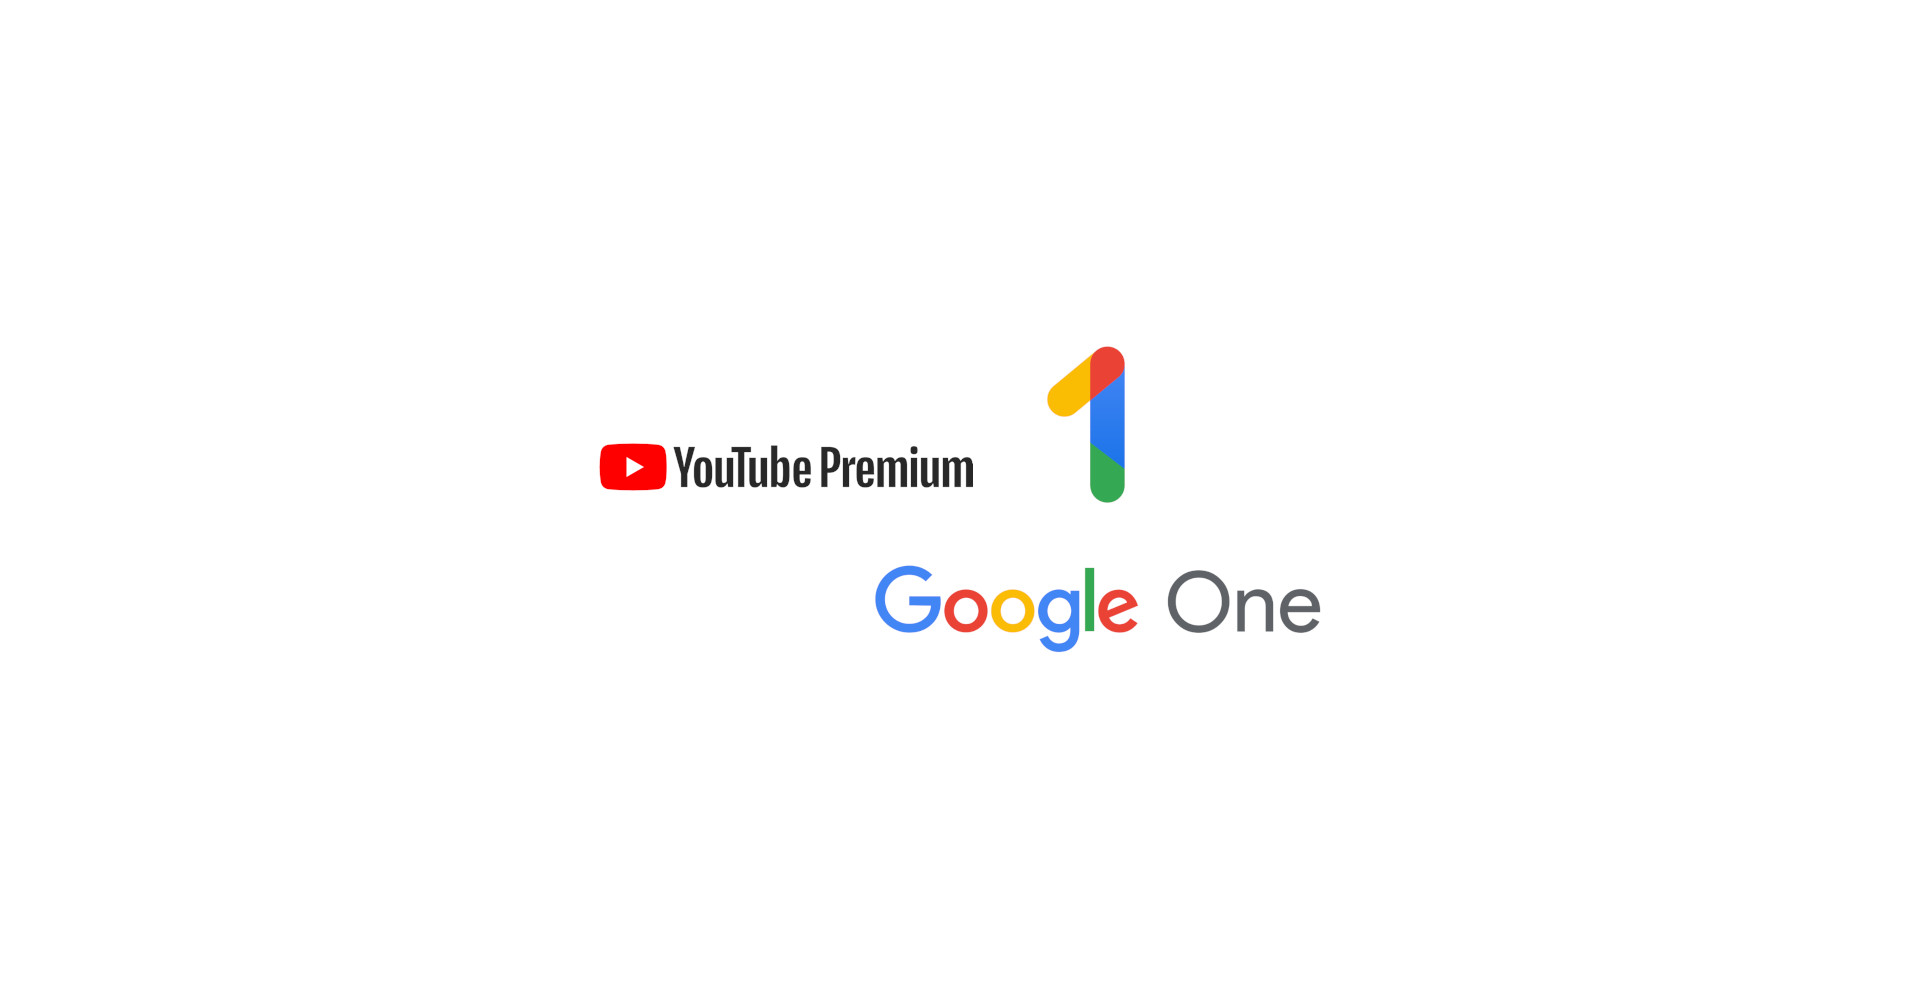 Jak získat YouTube Premium a Google One zdarma